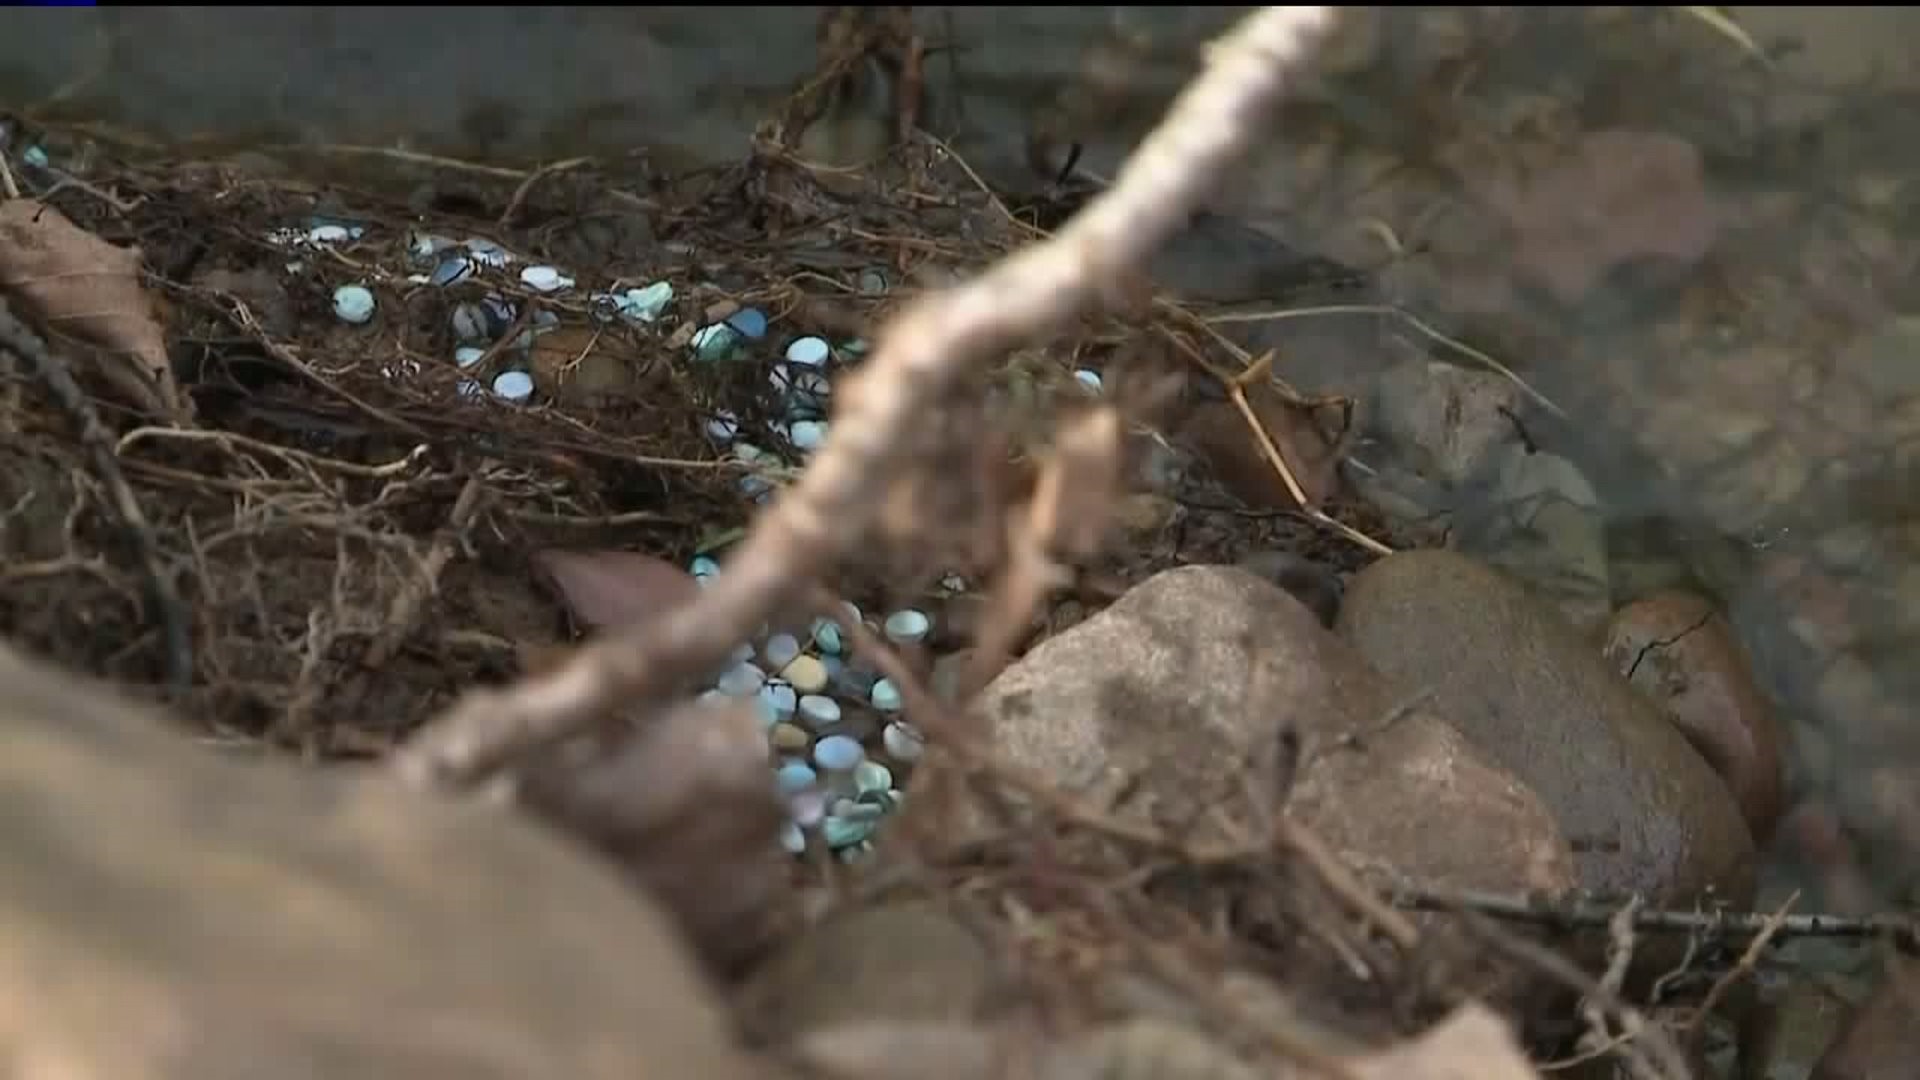 Debris Found in Monroe County Creek